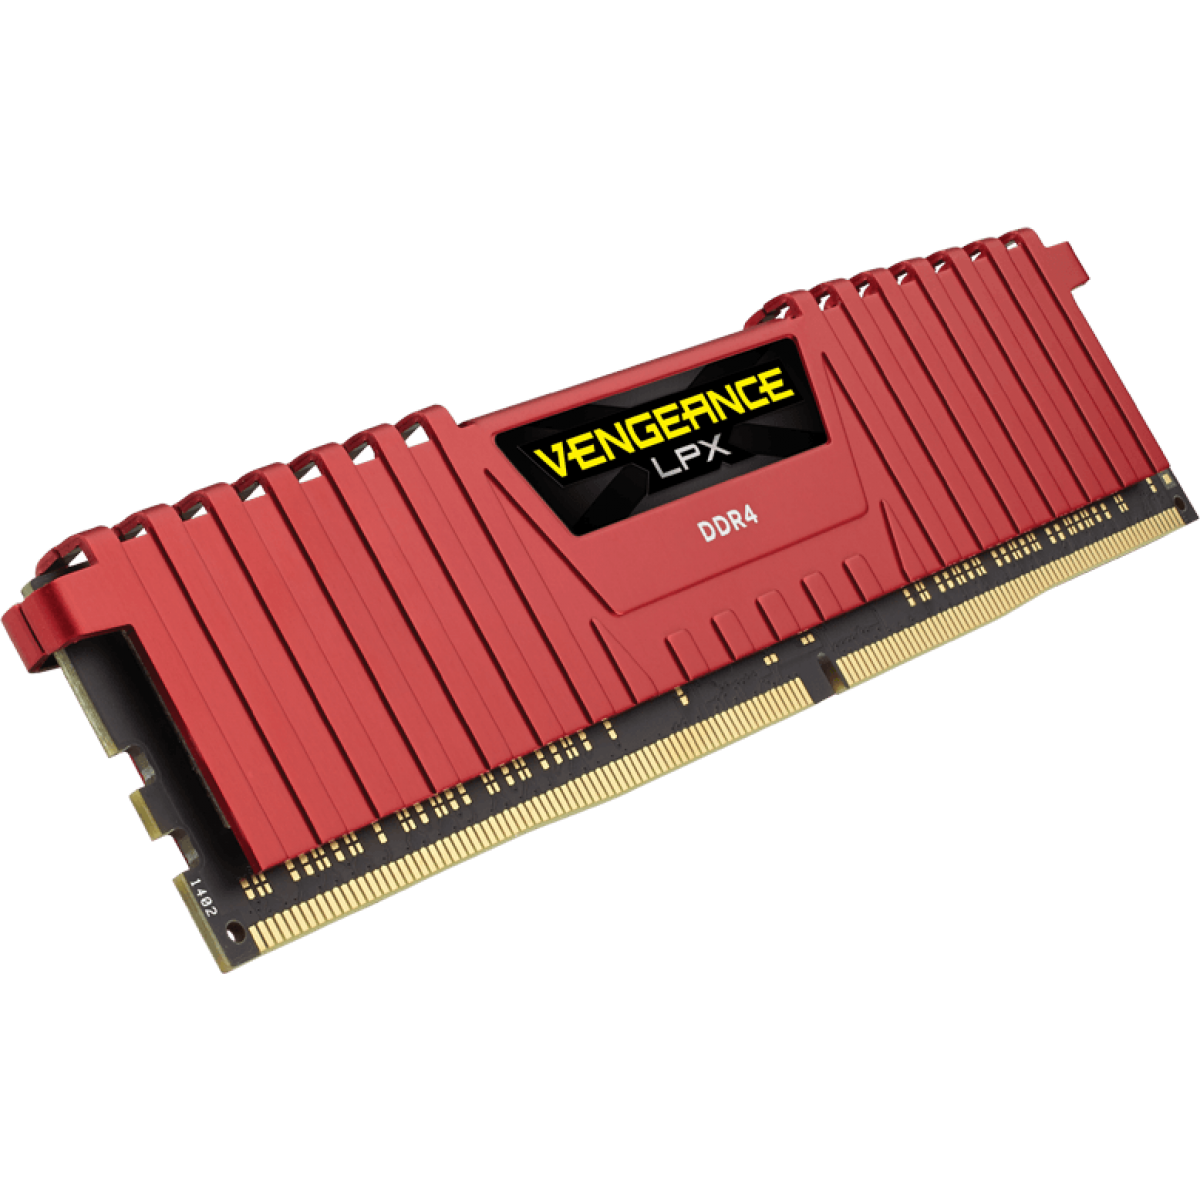 Memória DDR4 Corsair Vengeance LPX, 16GB (2x8GB) 2400MHz, Red, CMK16GX4M2A2400C14R